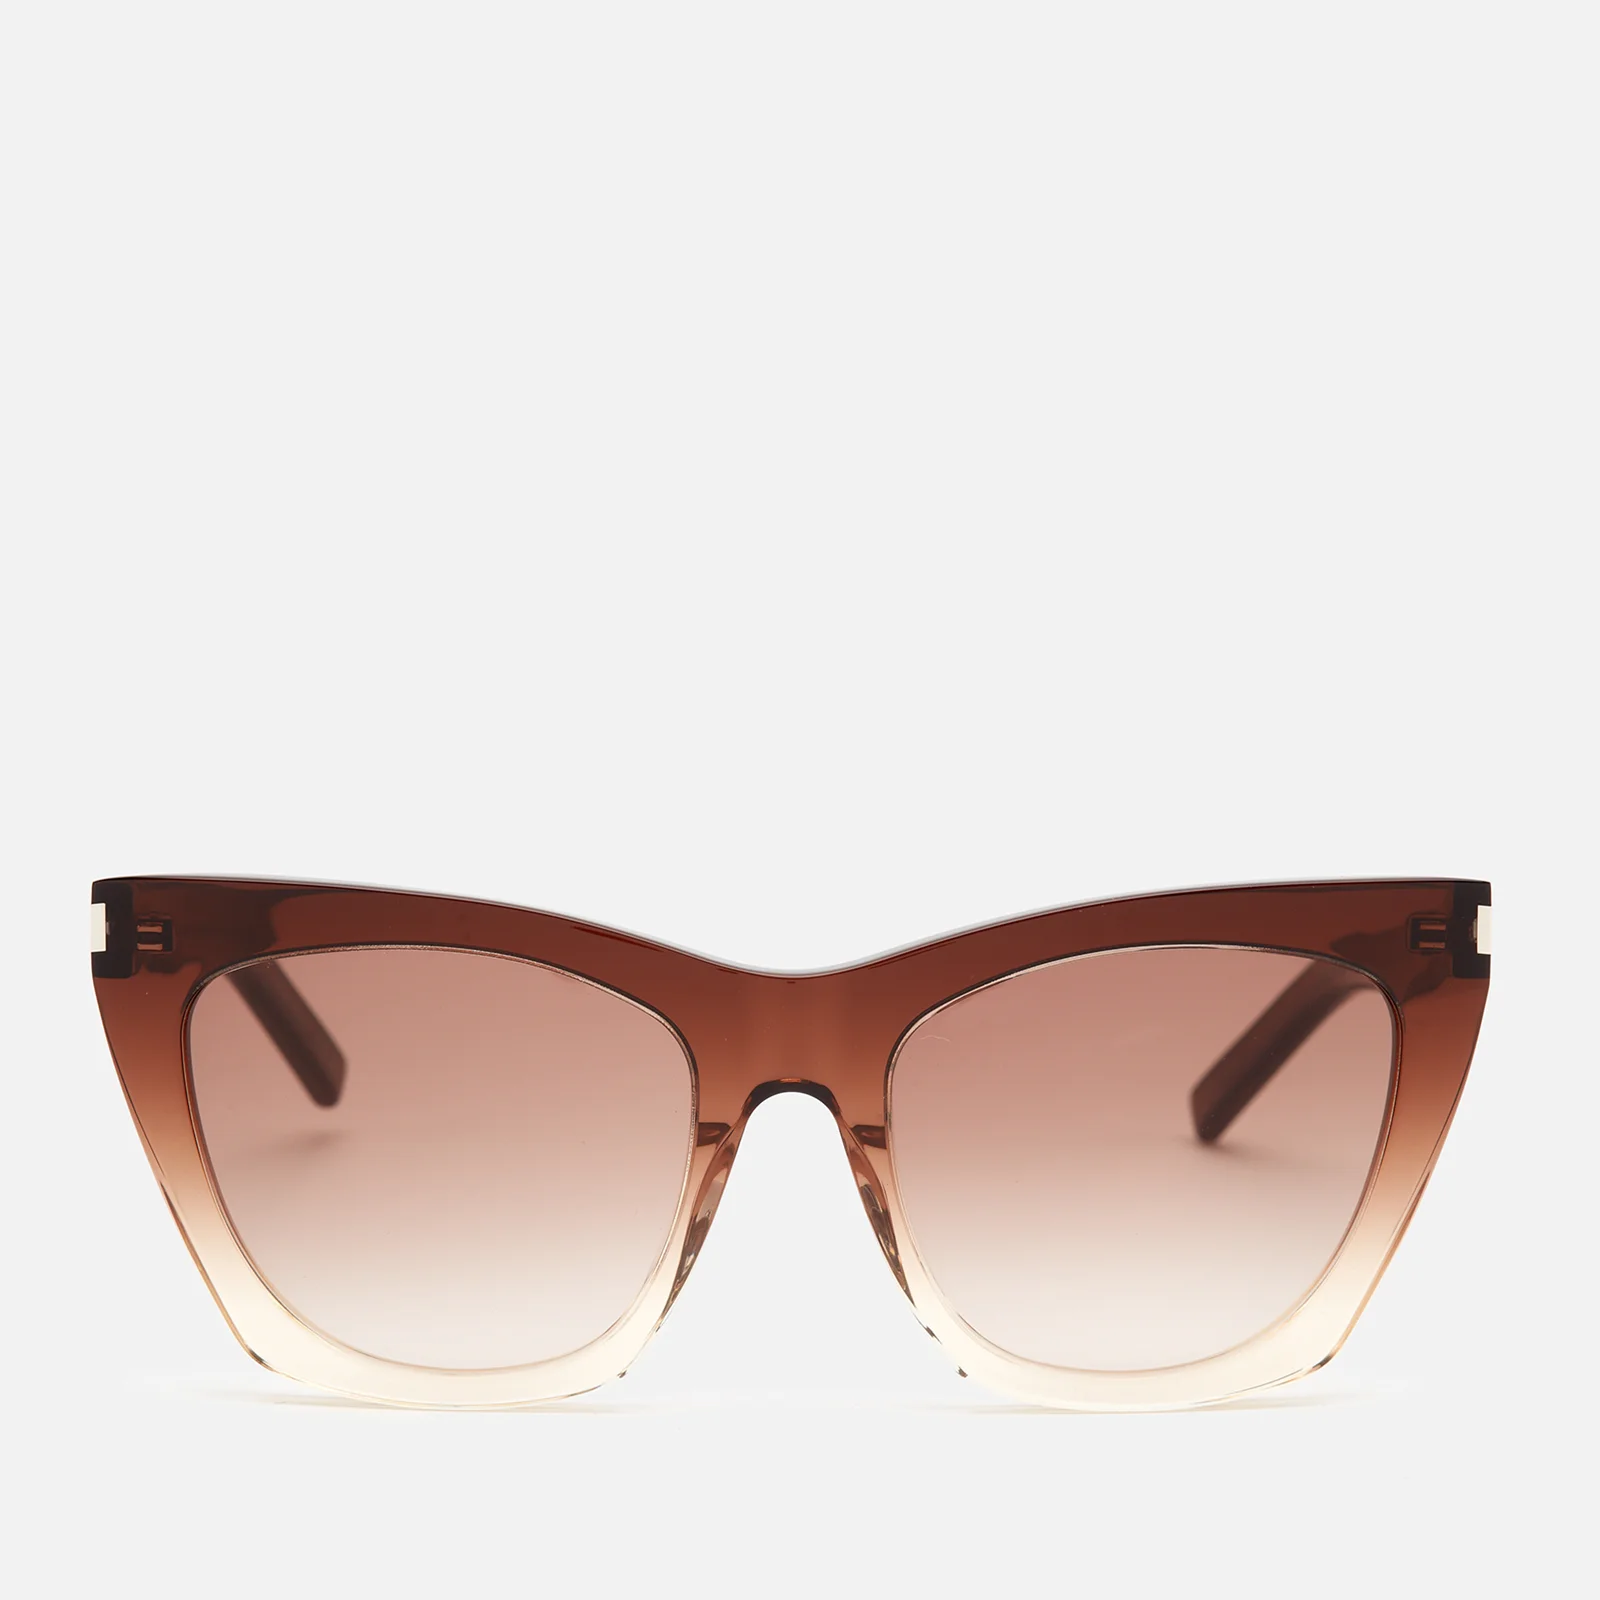 Saint Laurent Women's Kate Cat Eye Sunglasses - Brown Image 1